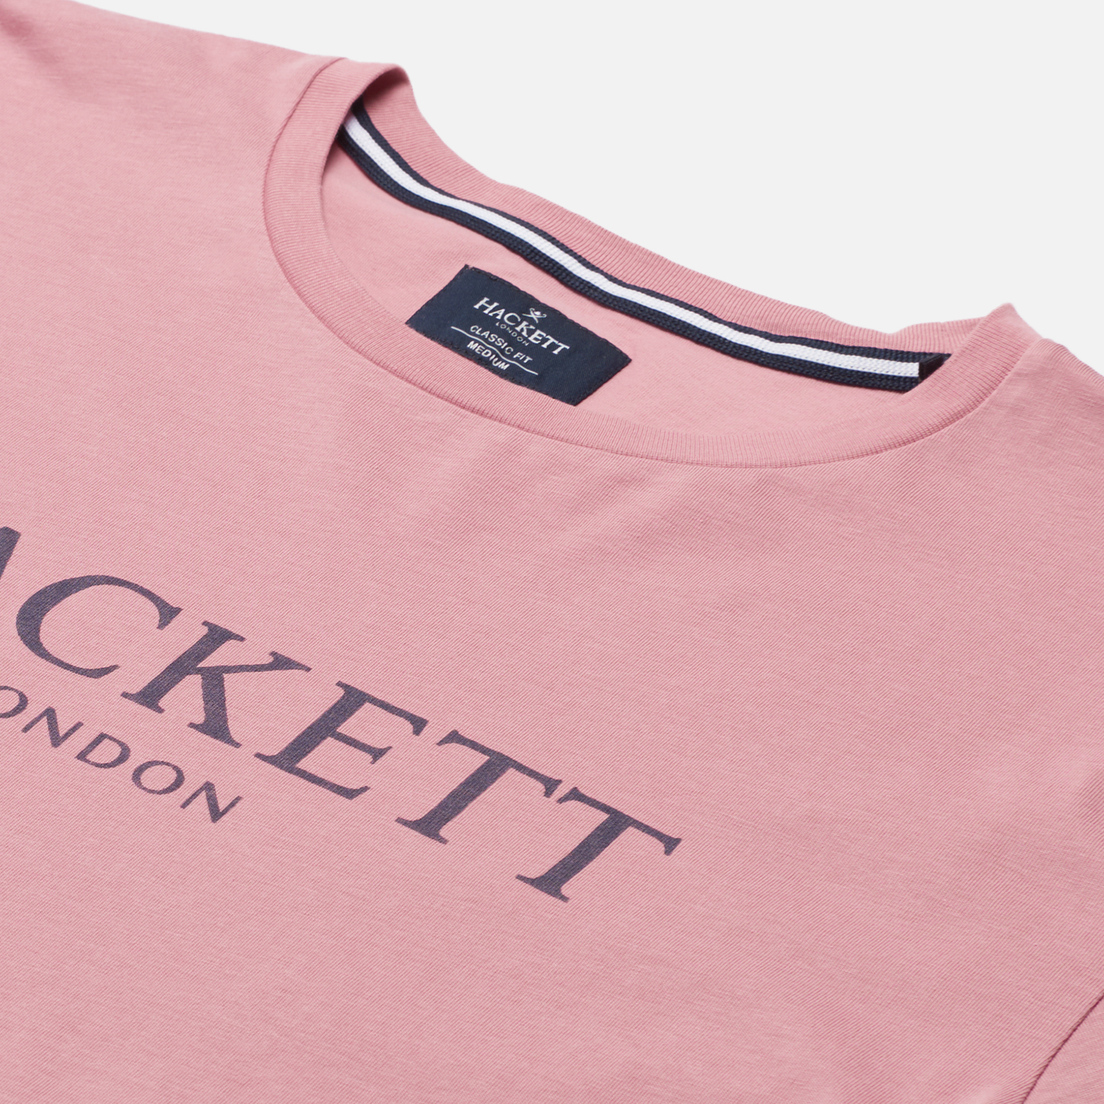 Hackett Мужская футболка London Logo